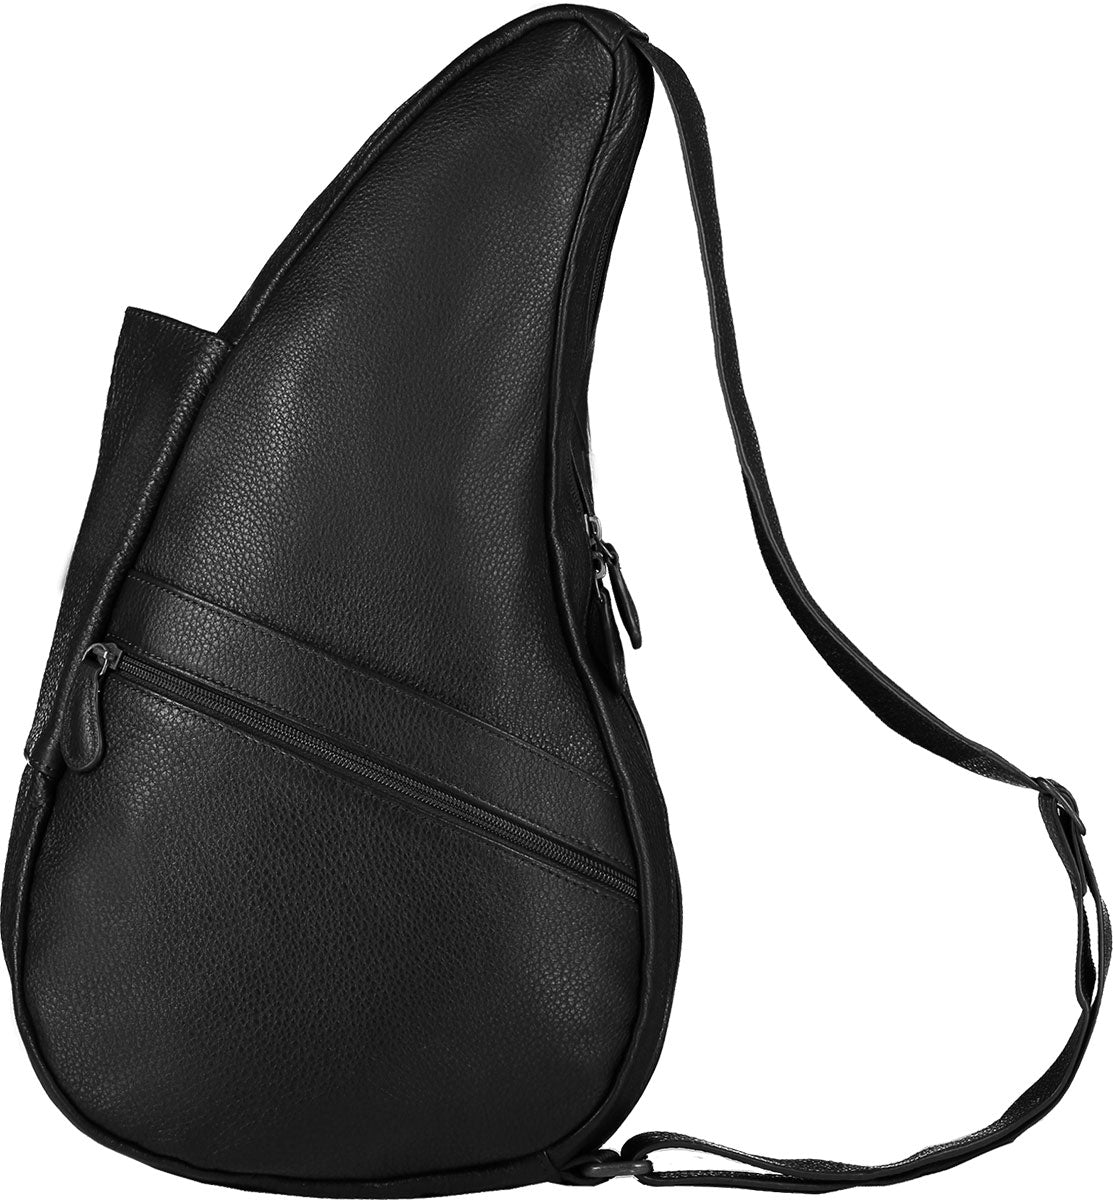 AmeriBag Healthy Back Bag tote Leather Small (Black)